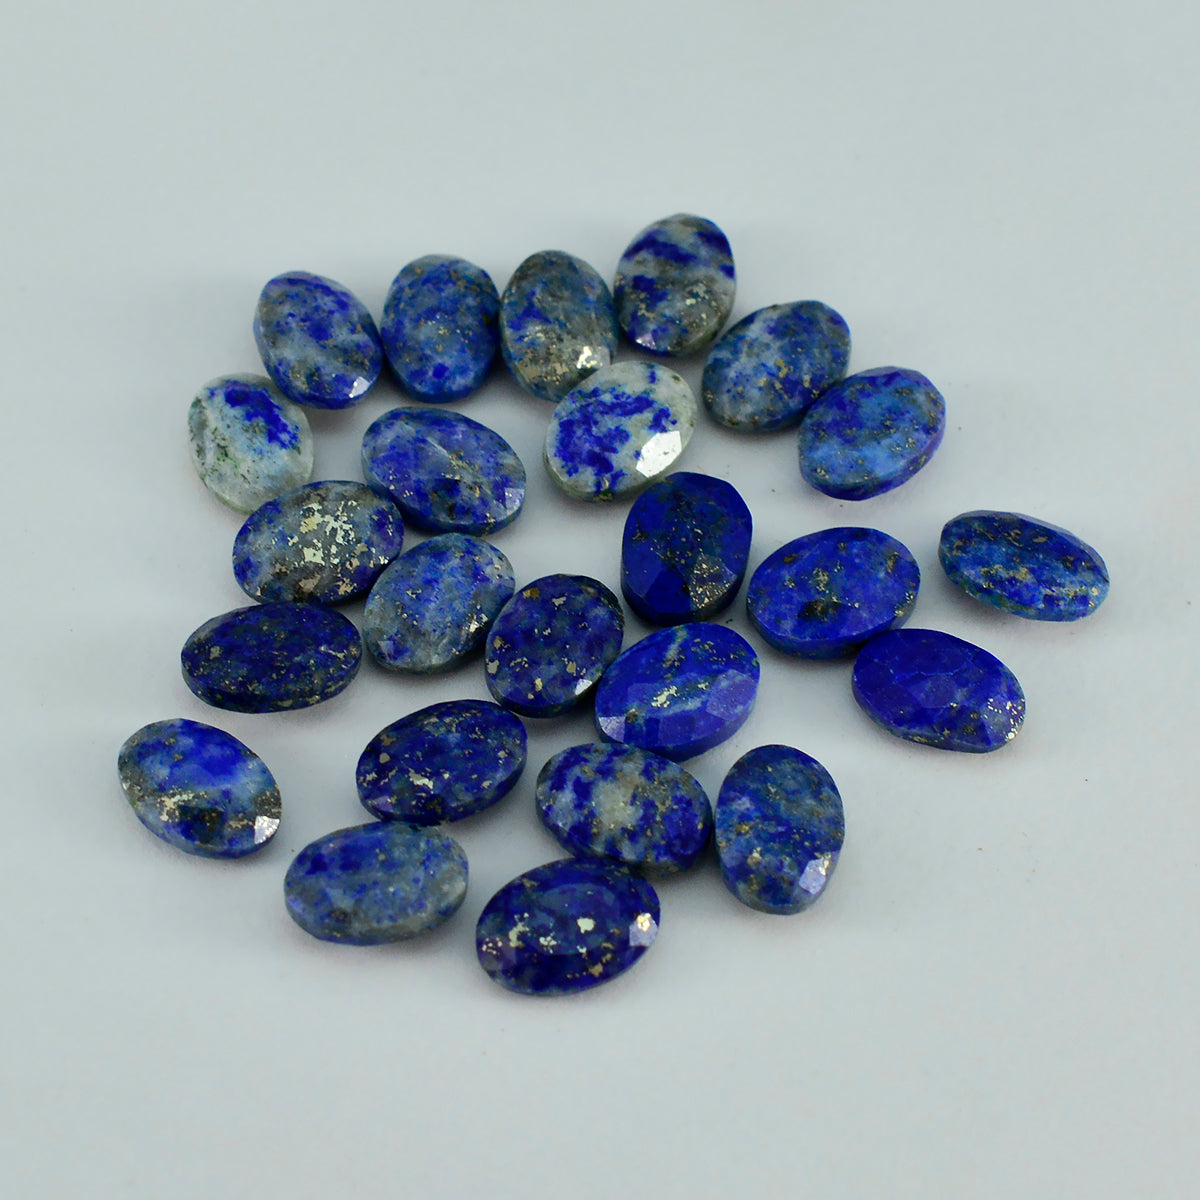 Riyogems 1 Stück echter blauer Lapislazuli, facettiert, 6 x 8 mm, ovale Form, gut aussehender Qualitätsstein